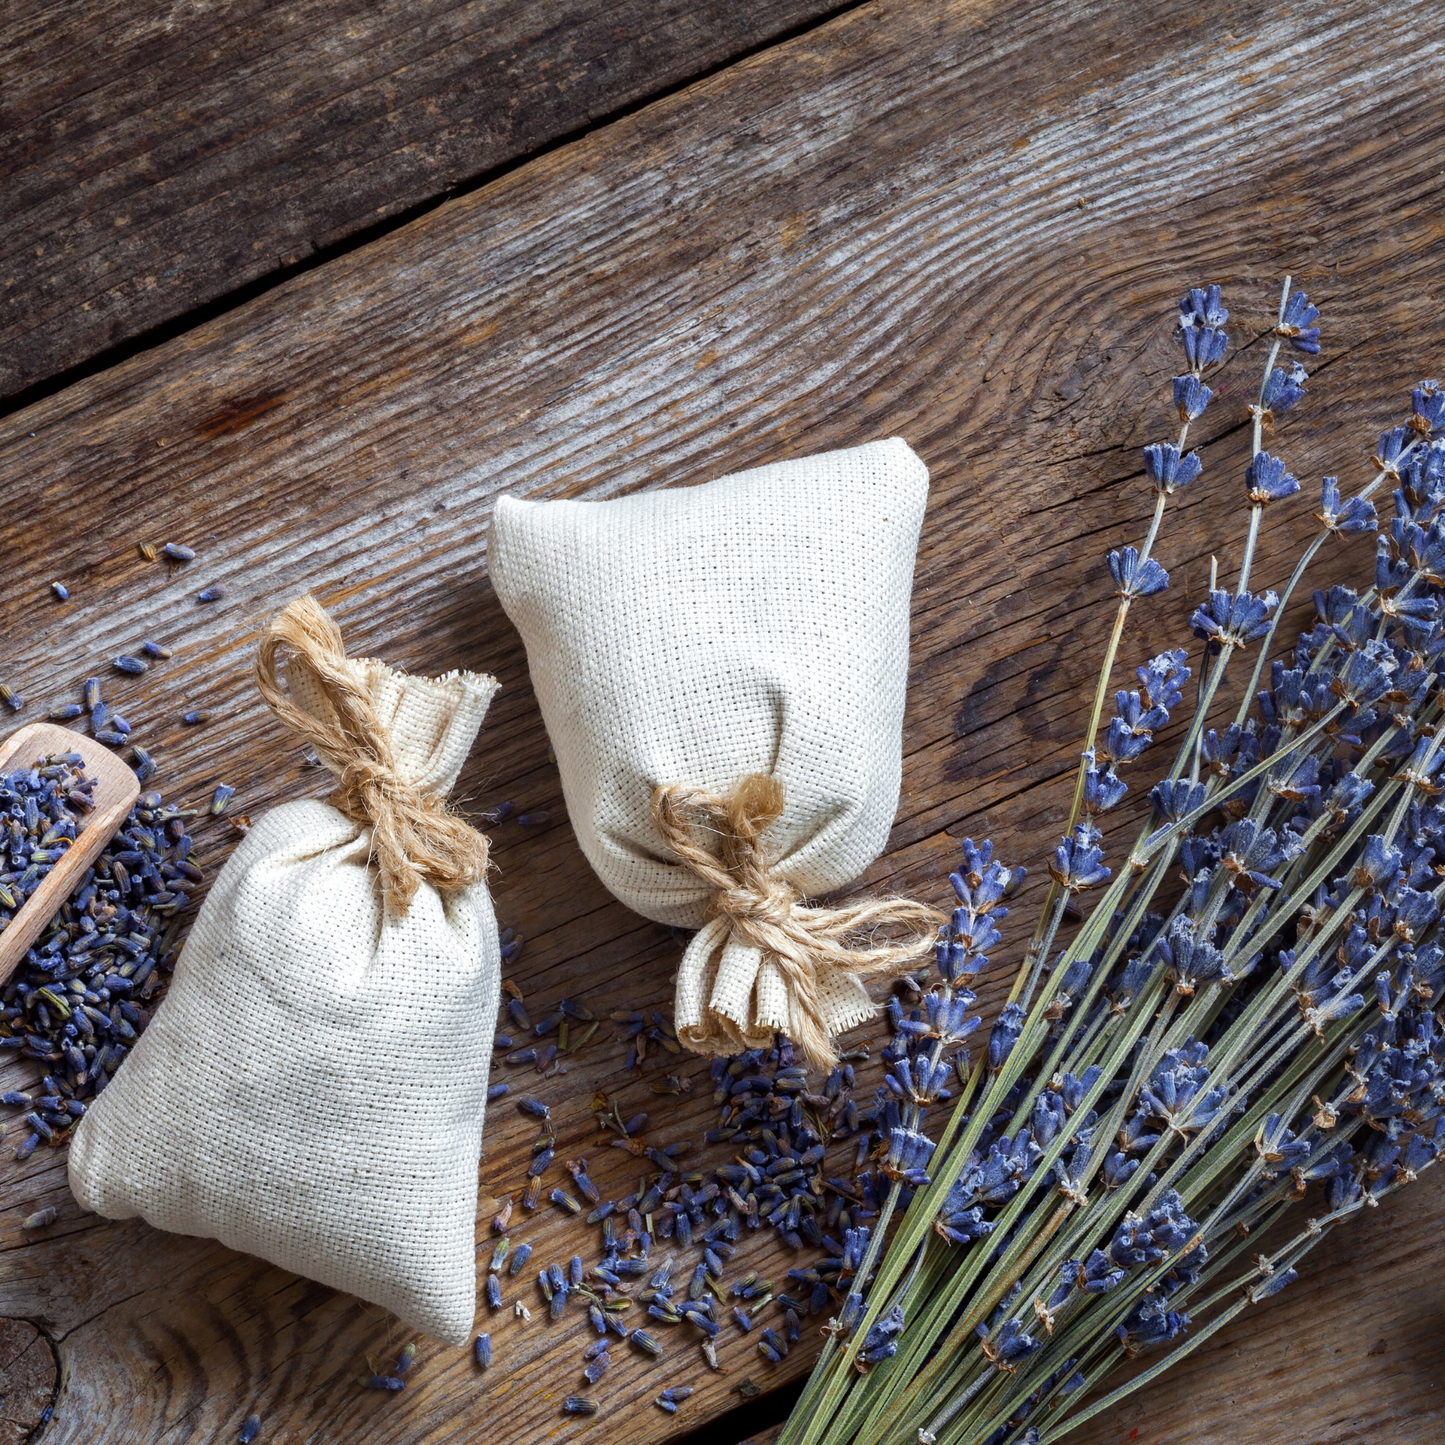 Organic French Lavender